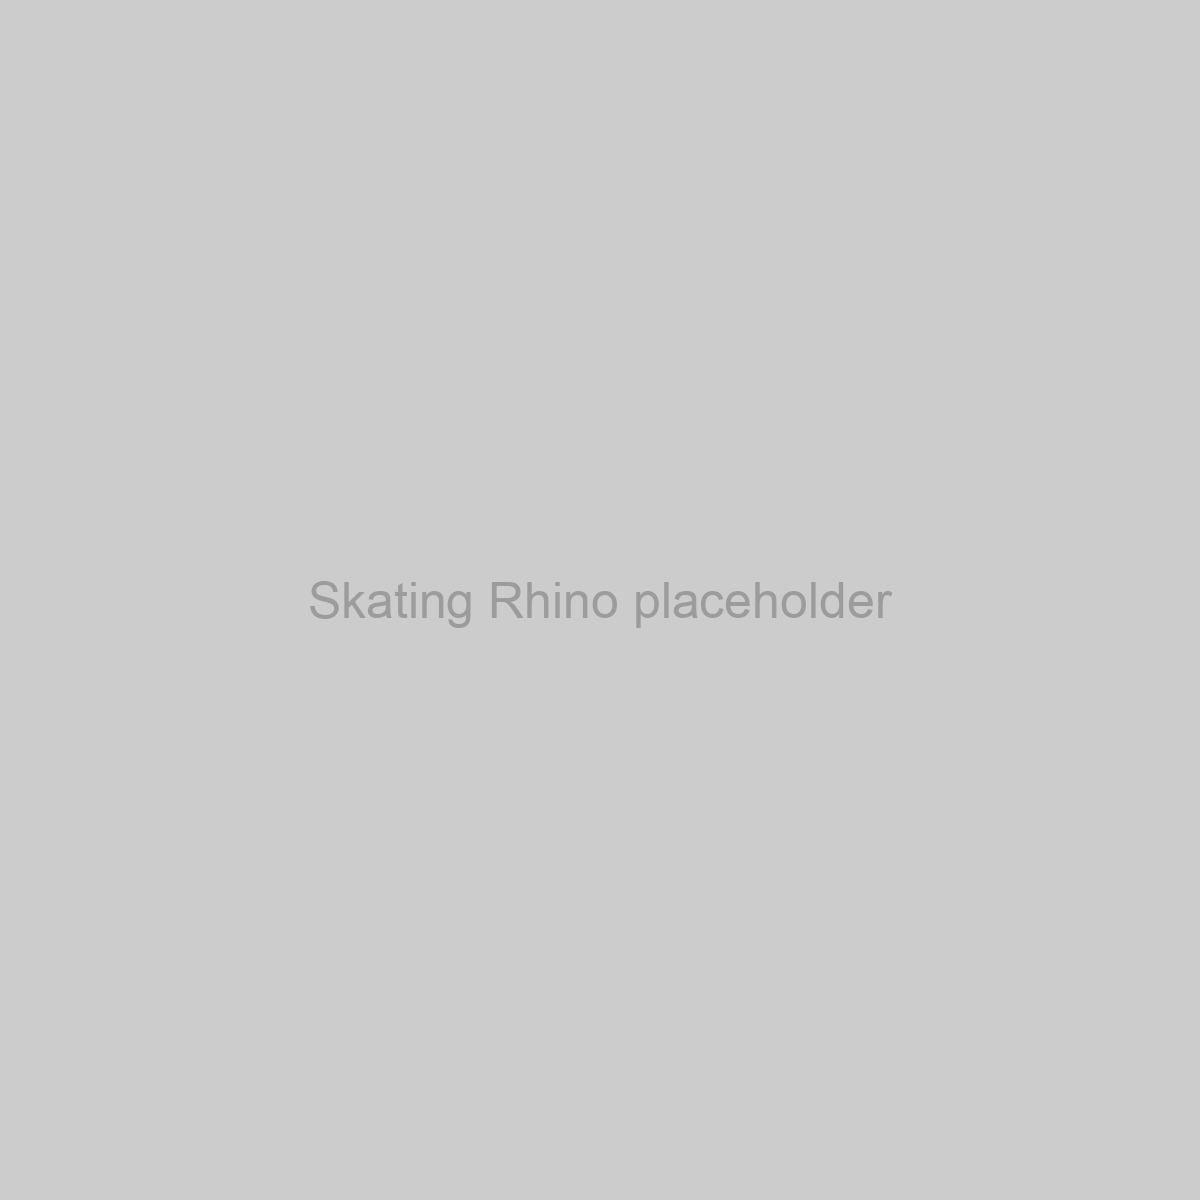 Skating Rhino Placeholder Image